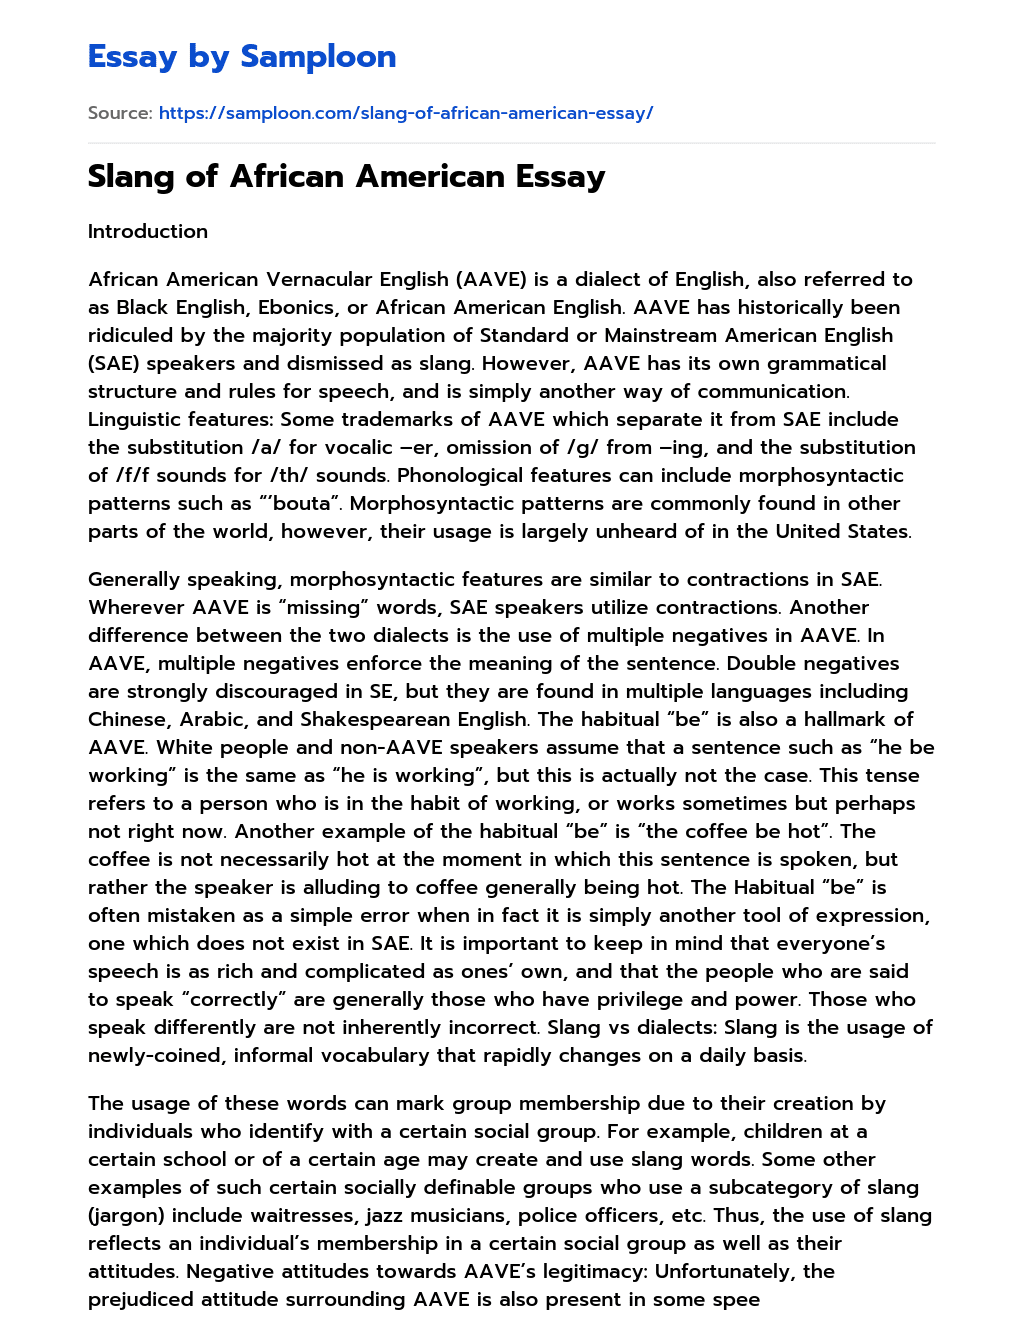 Slang of African American Essay essay